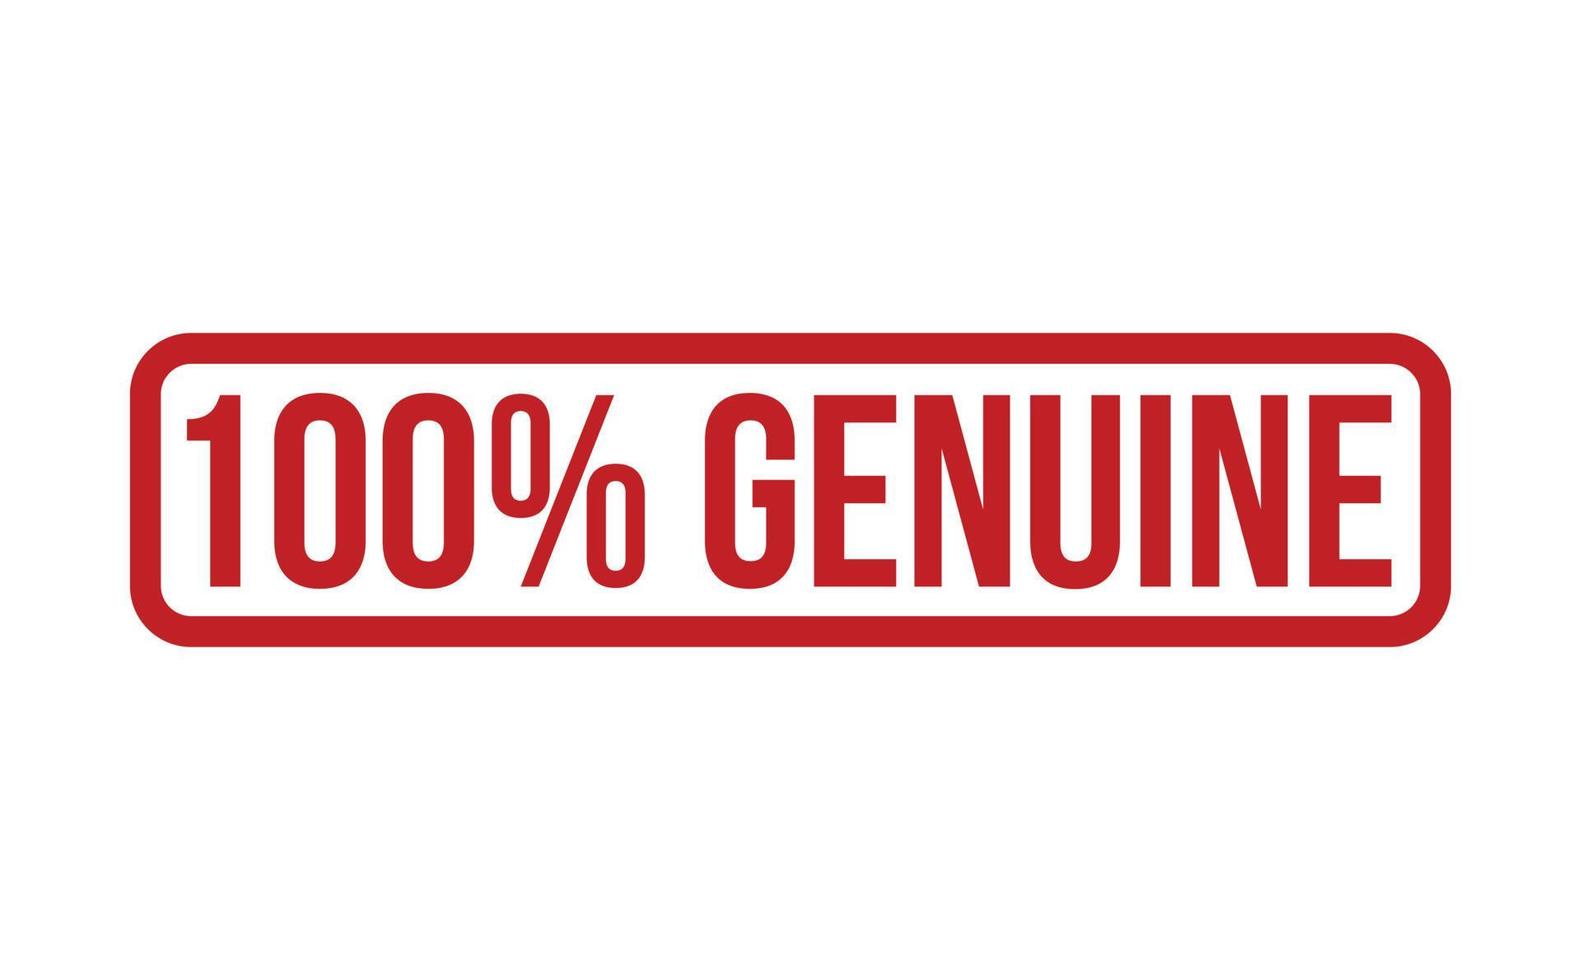 100 Percent Rubber Stamp. Red 100 Percent Genuine Rubber Grunge Stamp Seal Vector Illustration